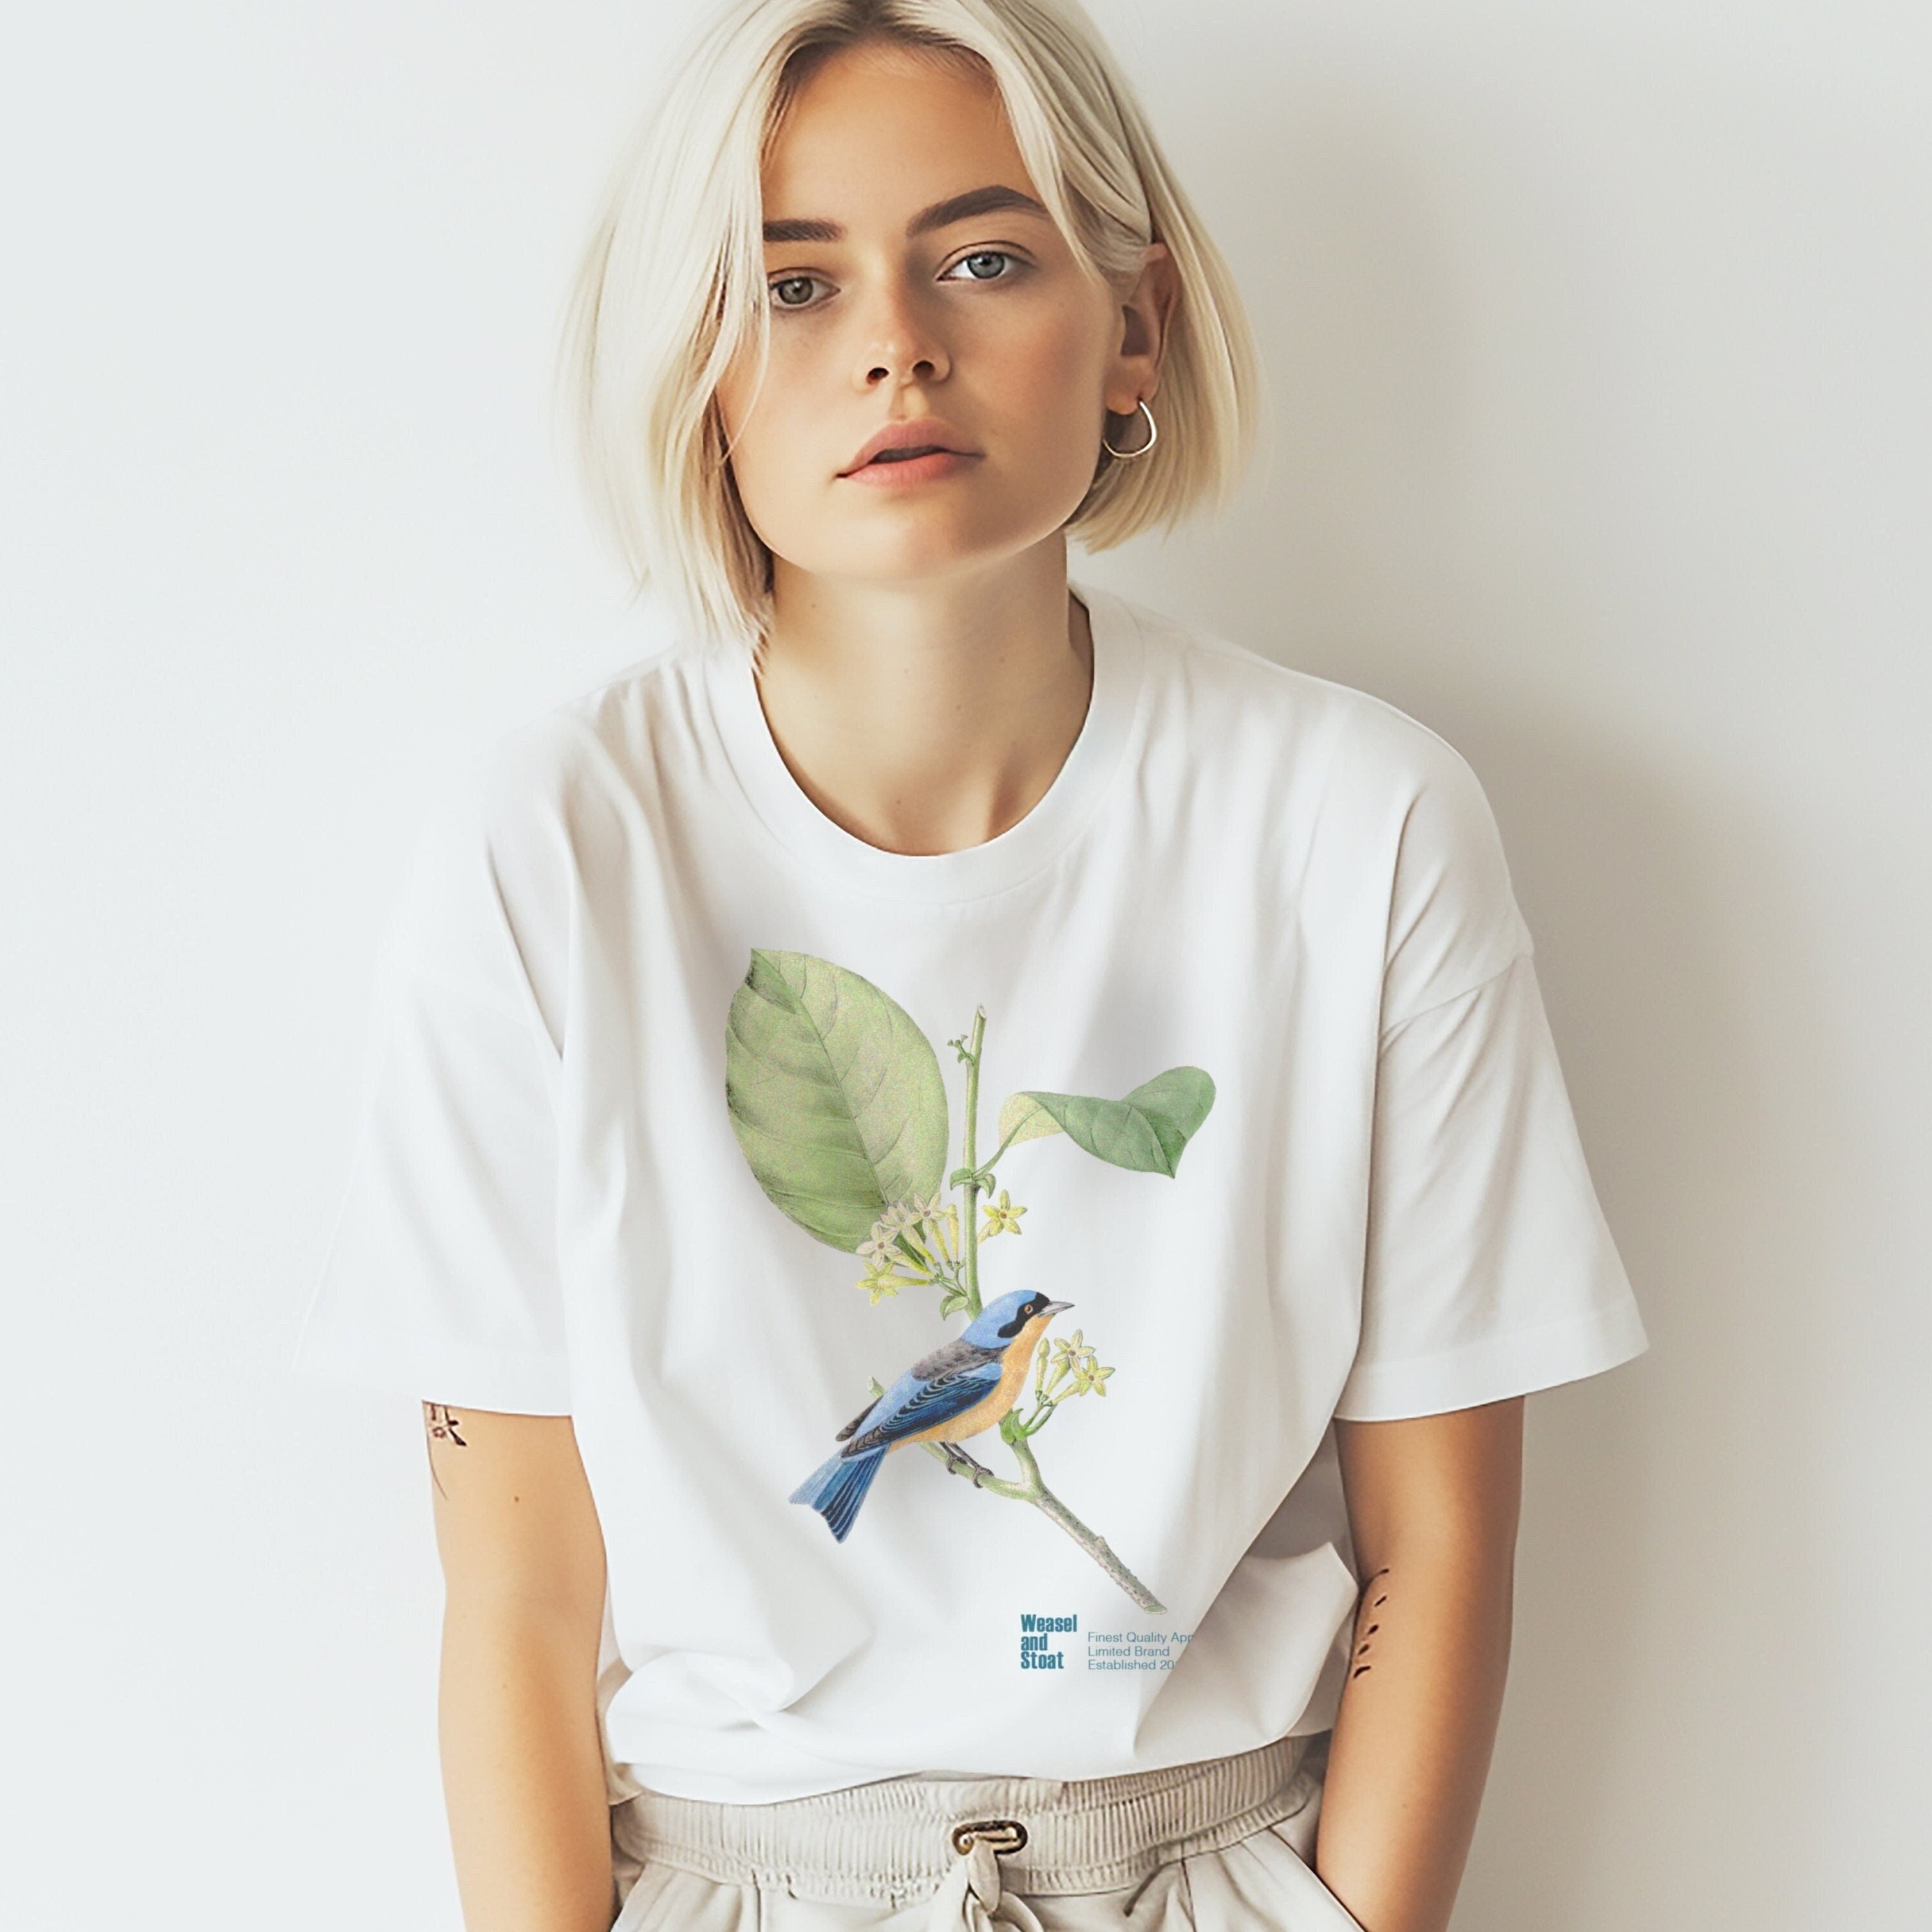 Vintage Blue Bird Illustration White T-Shirt - Classic Botanical Still Life Tee - Unisex Boho Apparel - Aesthetic T Gift- Retro Style Shirt